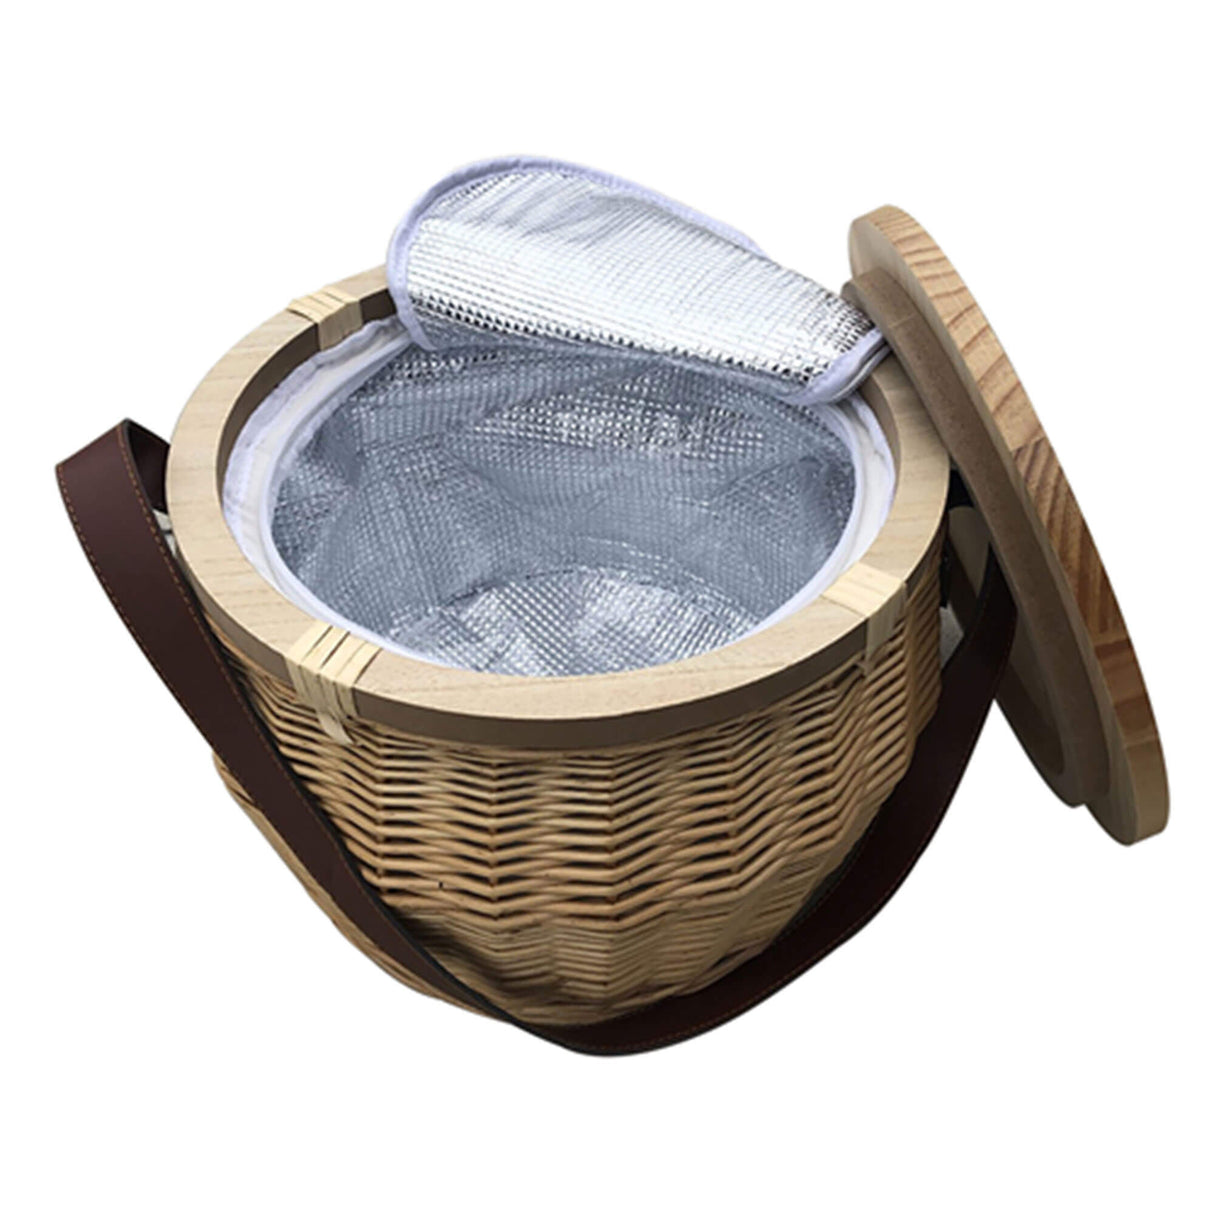 Wicker Picnic Cooler Basket Round - Engraved